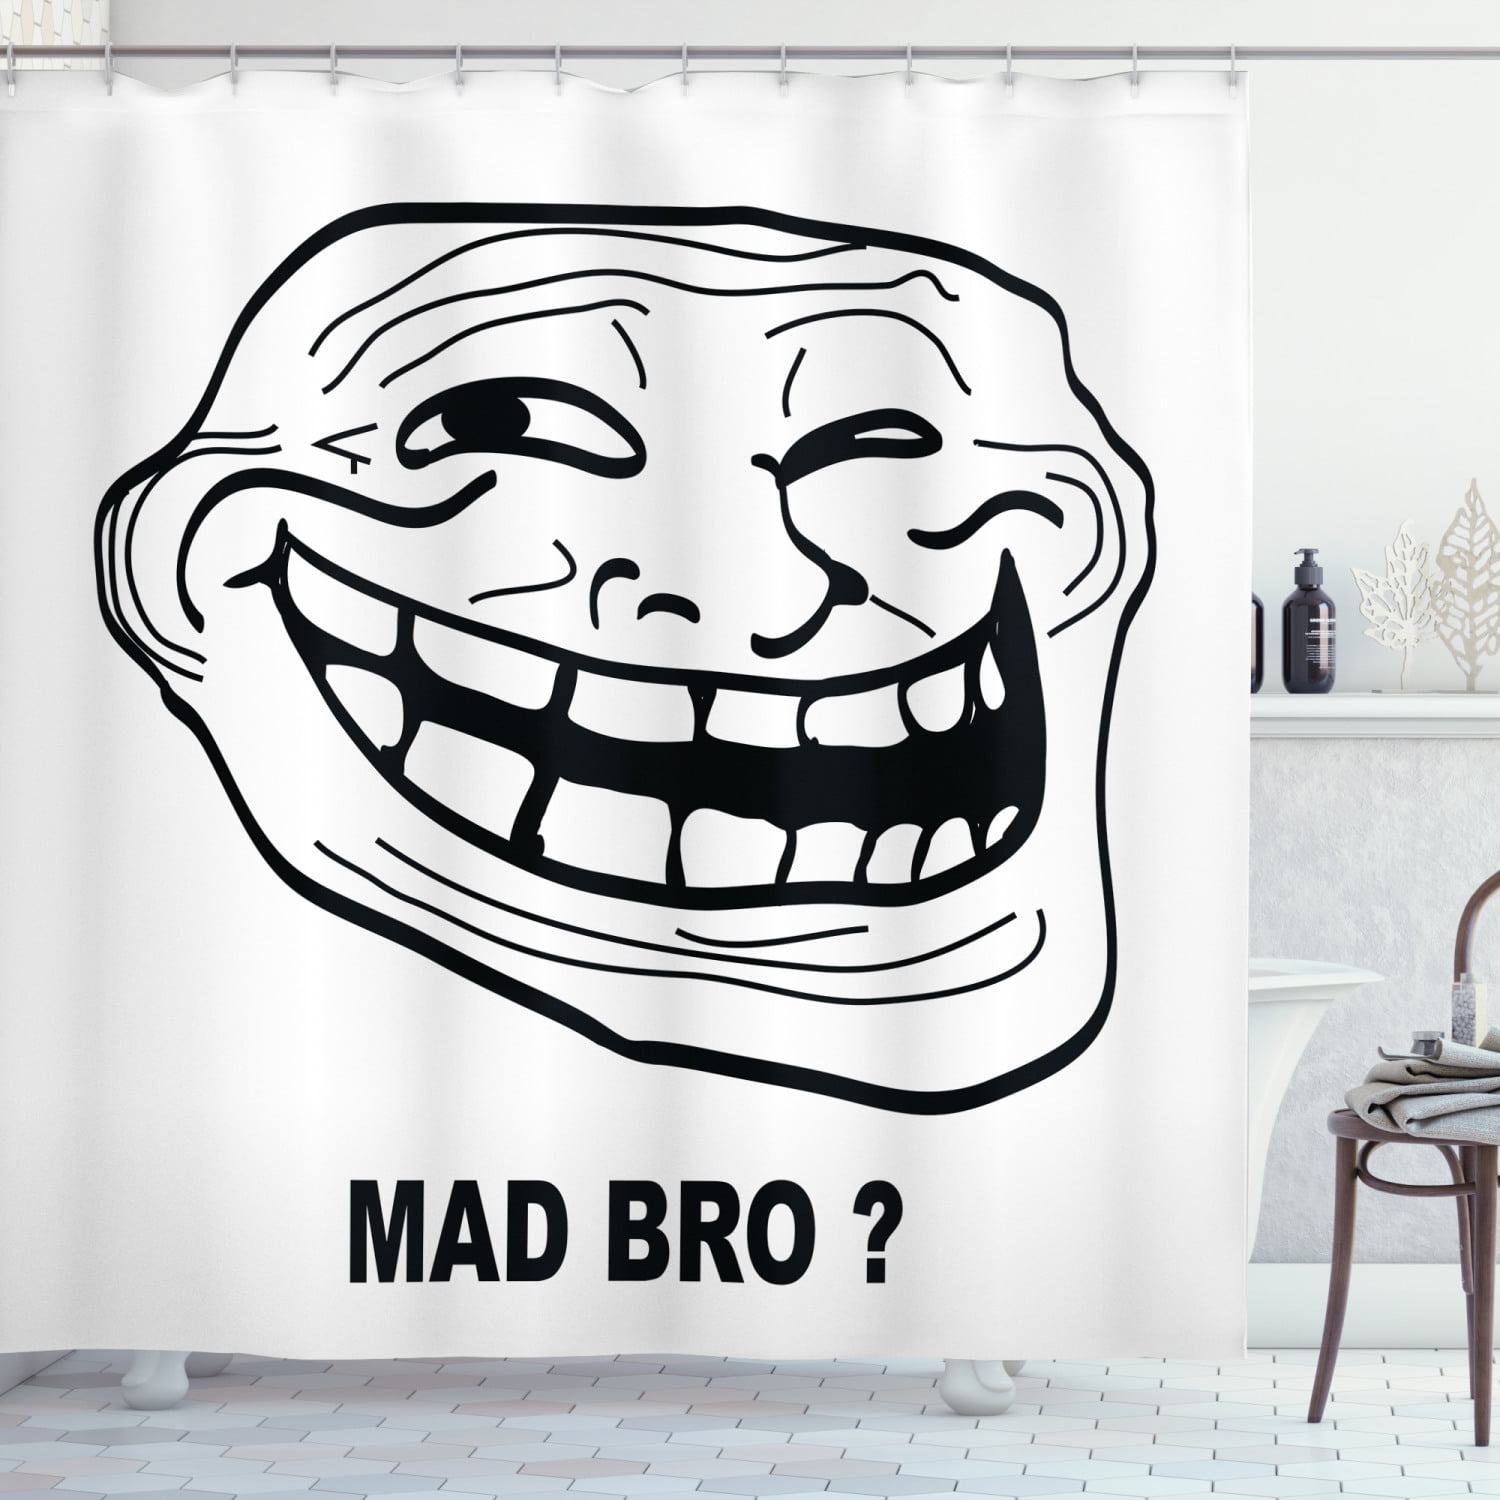 Humor Bath Mat, Grumpy Internet Troll Face with Trippy Gestures